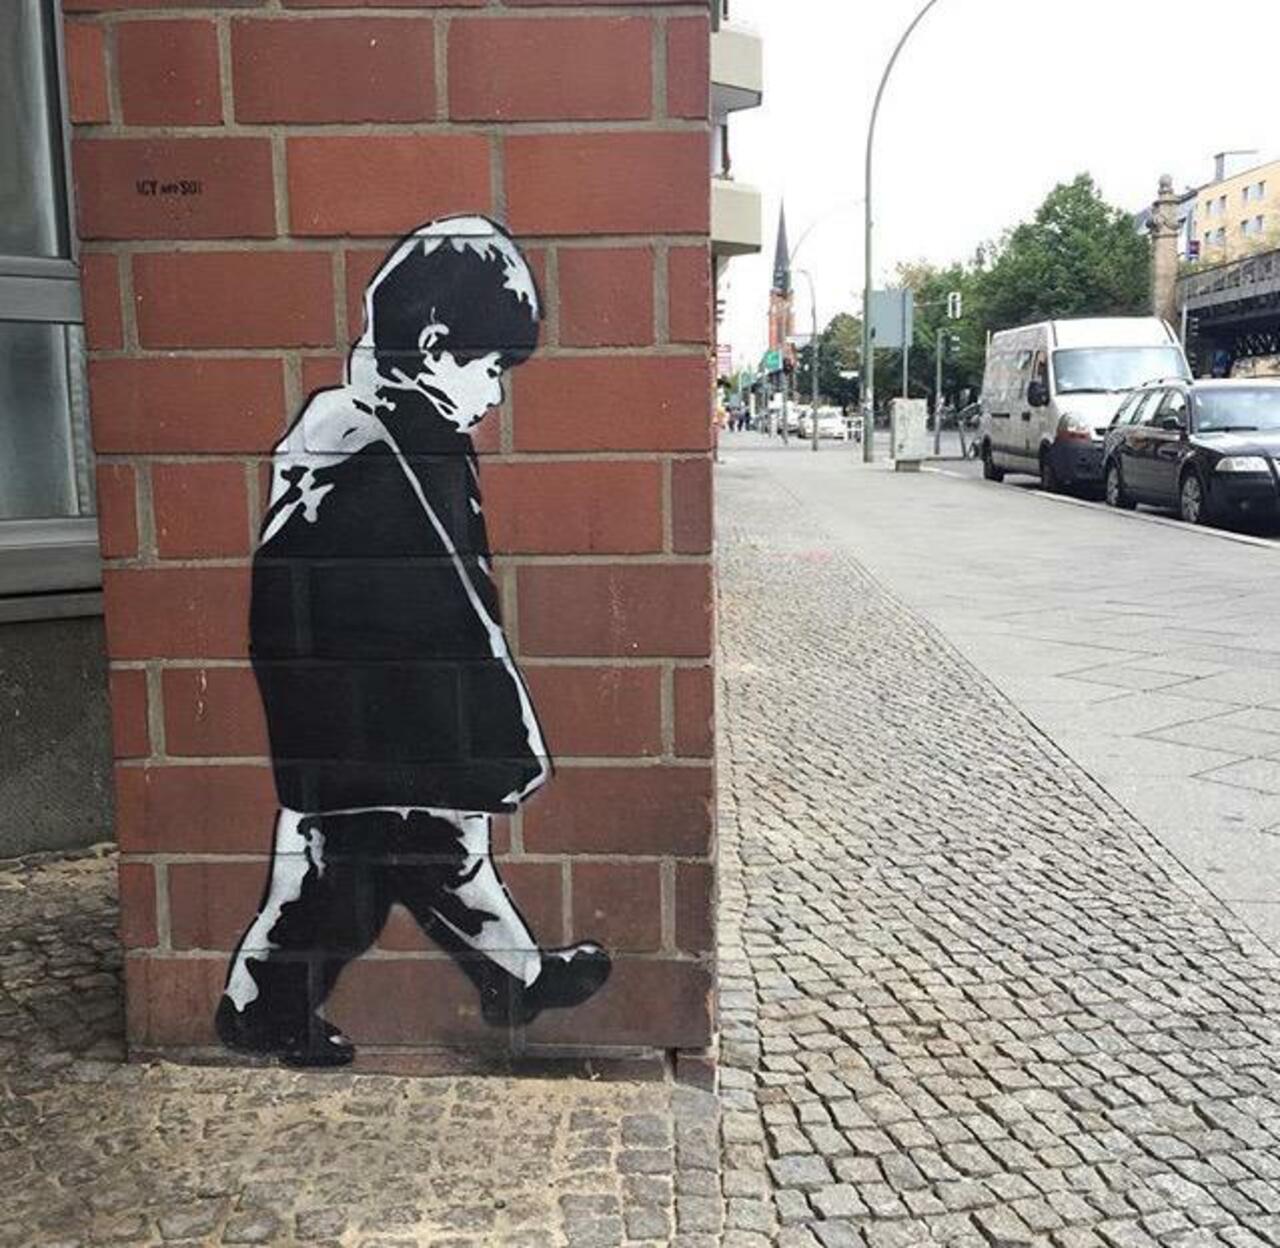 Street Art by Icy & Sot in Berlin 

#art #arte #graffiti #streetart http://t.co/IYQW22FquA